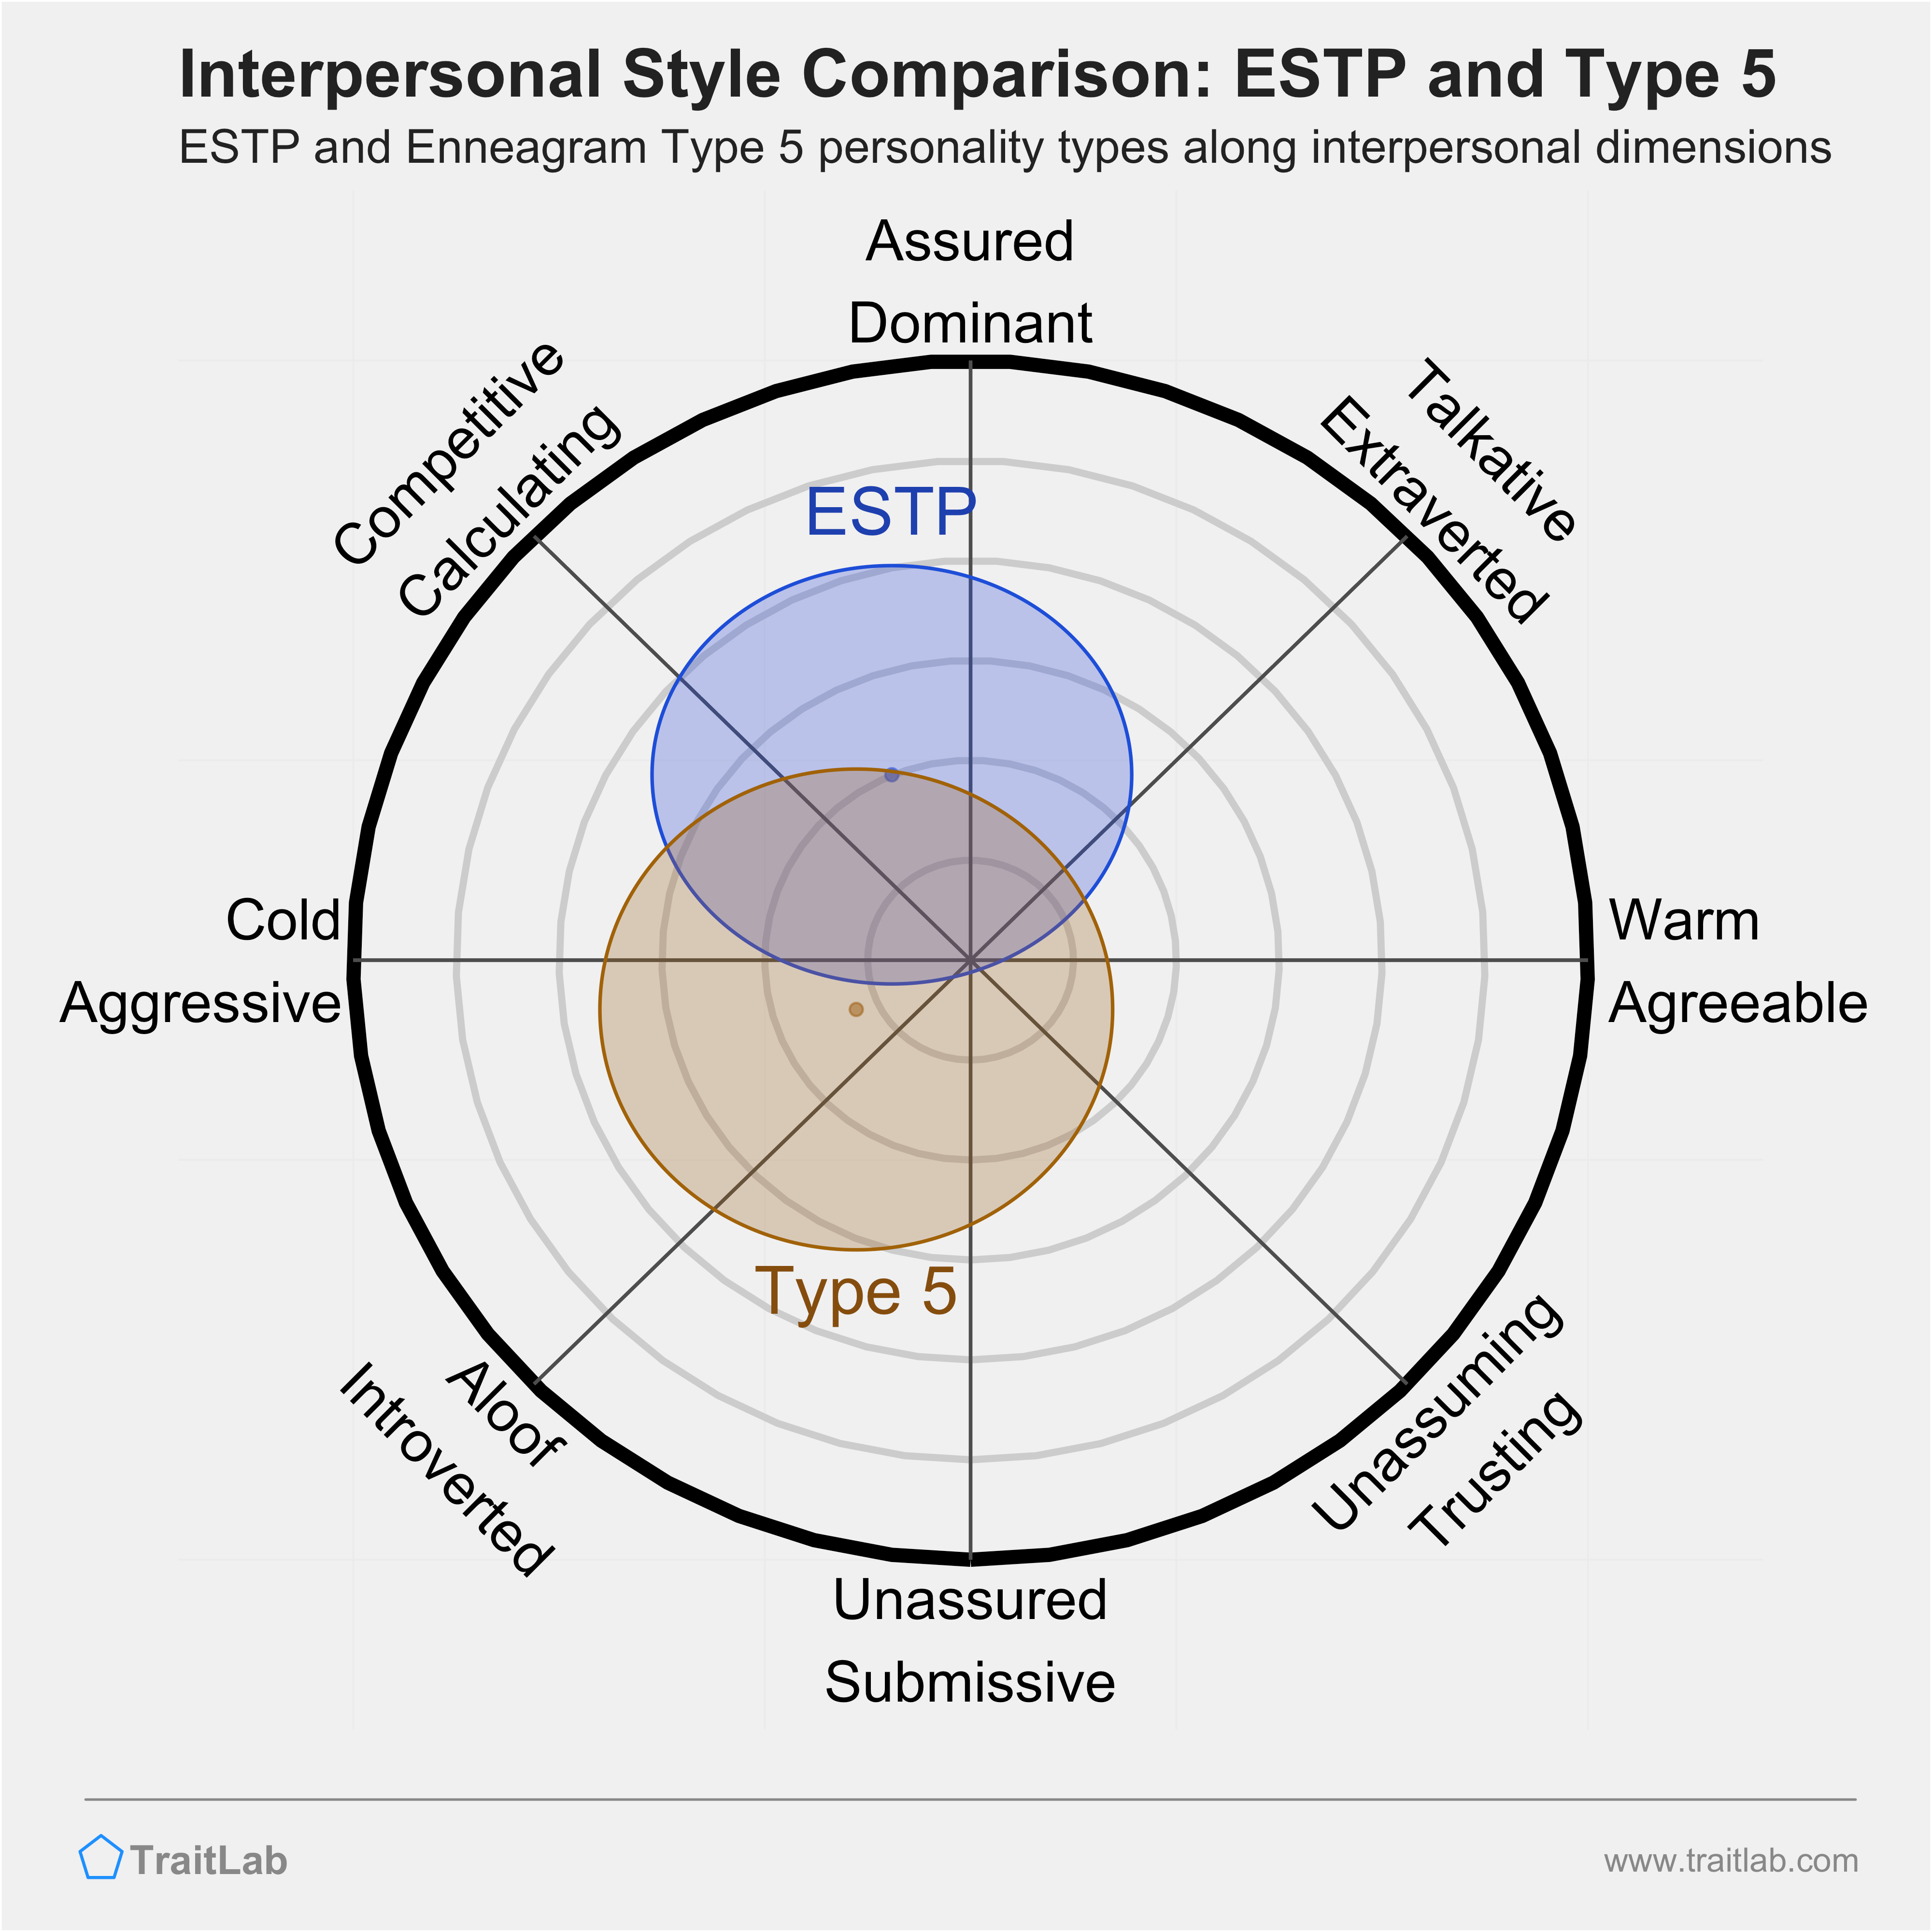 Enneagram ESTP and Type 5 comparison across interpersonal dimensions